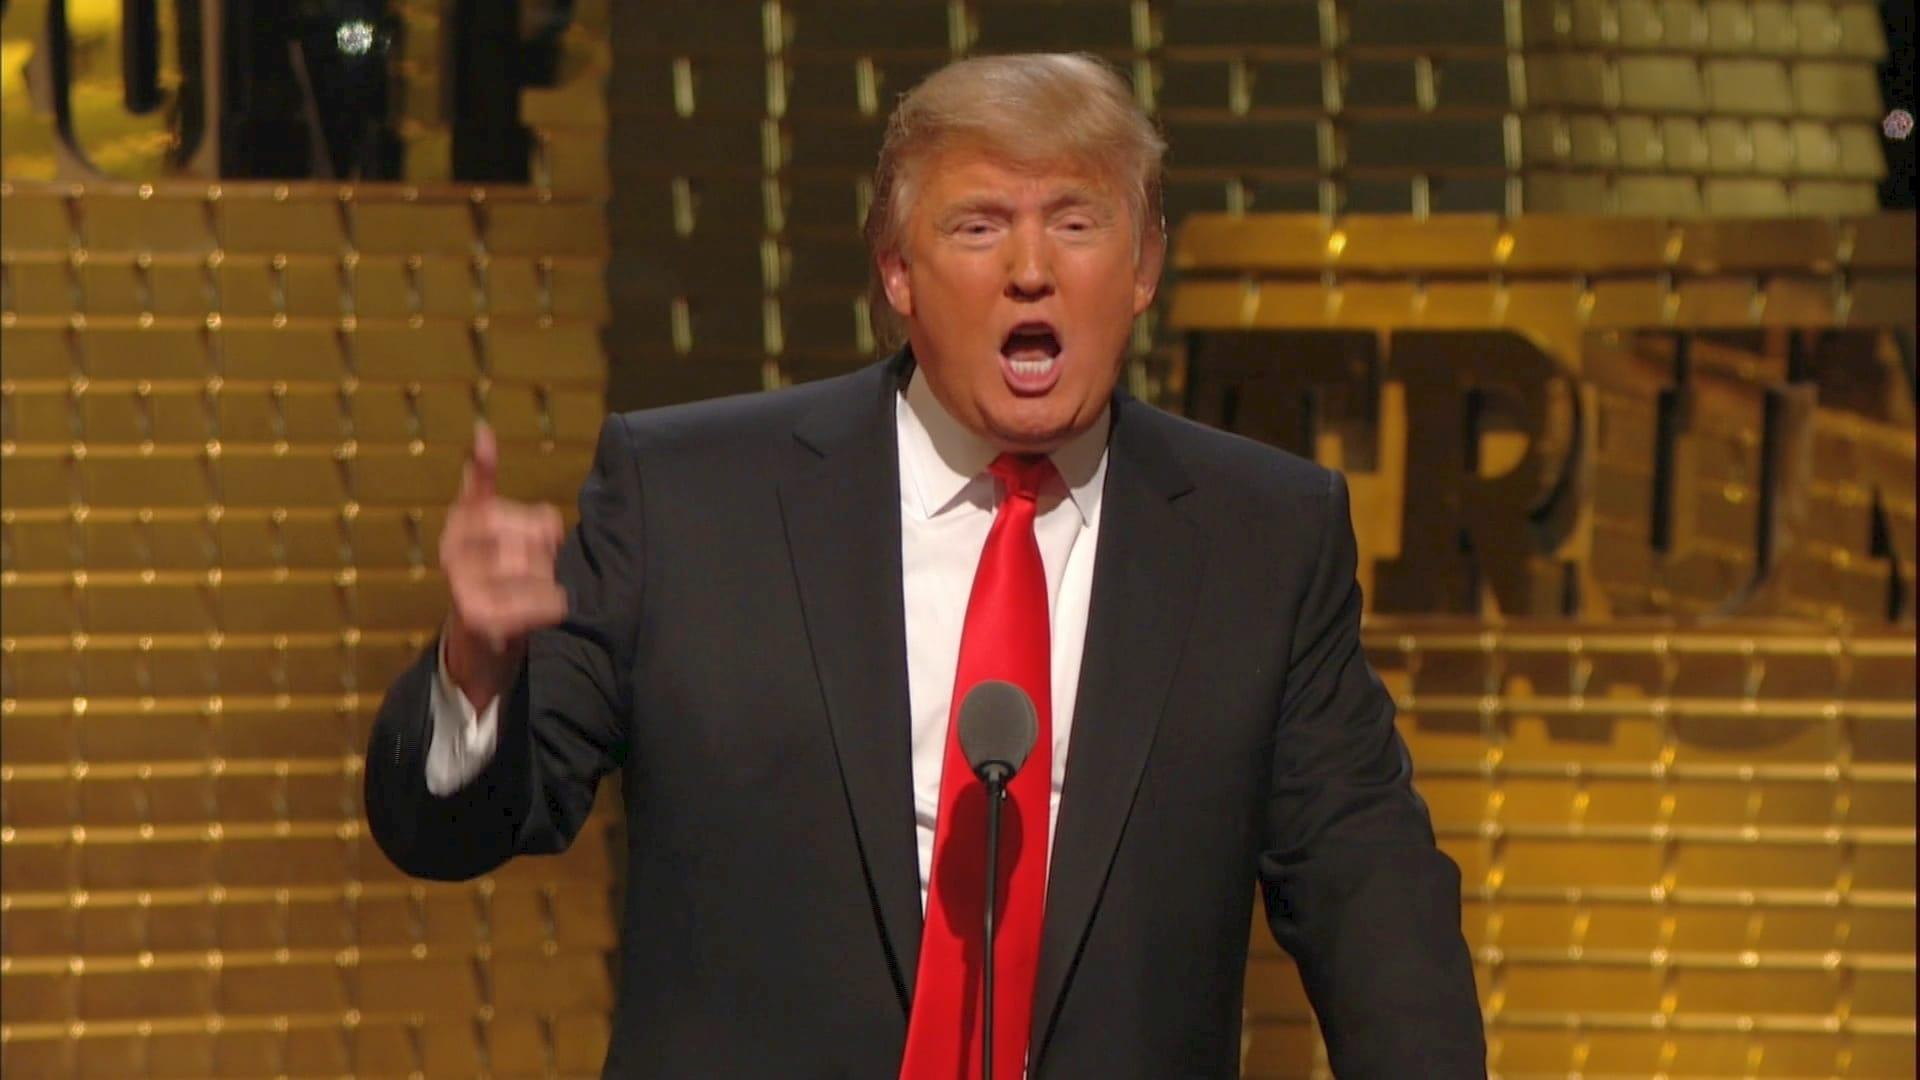 Comedy Central Roast of Donald Trump backdrop